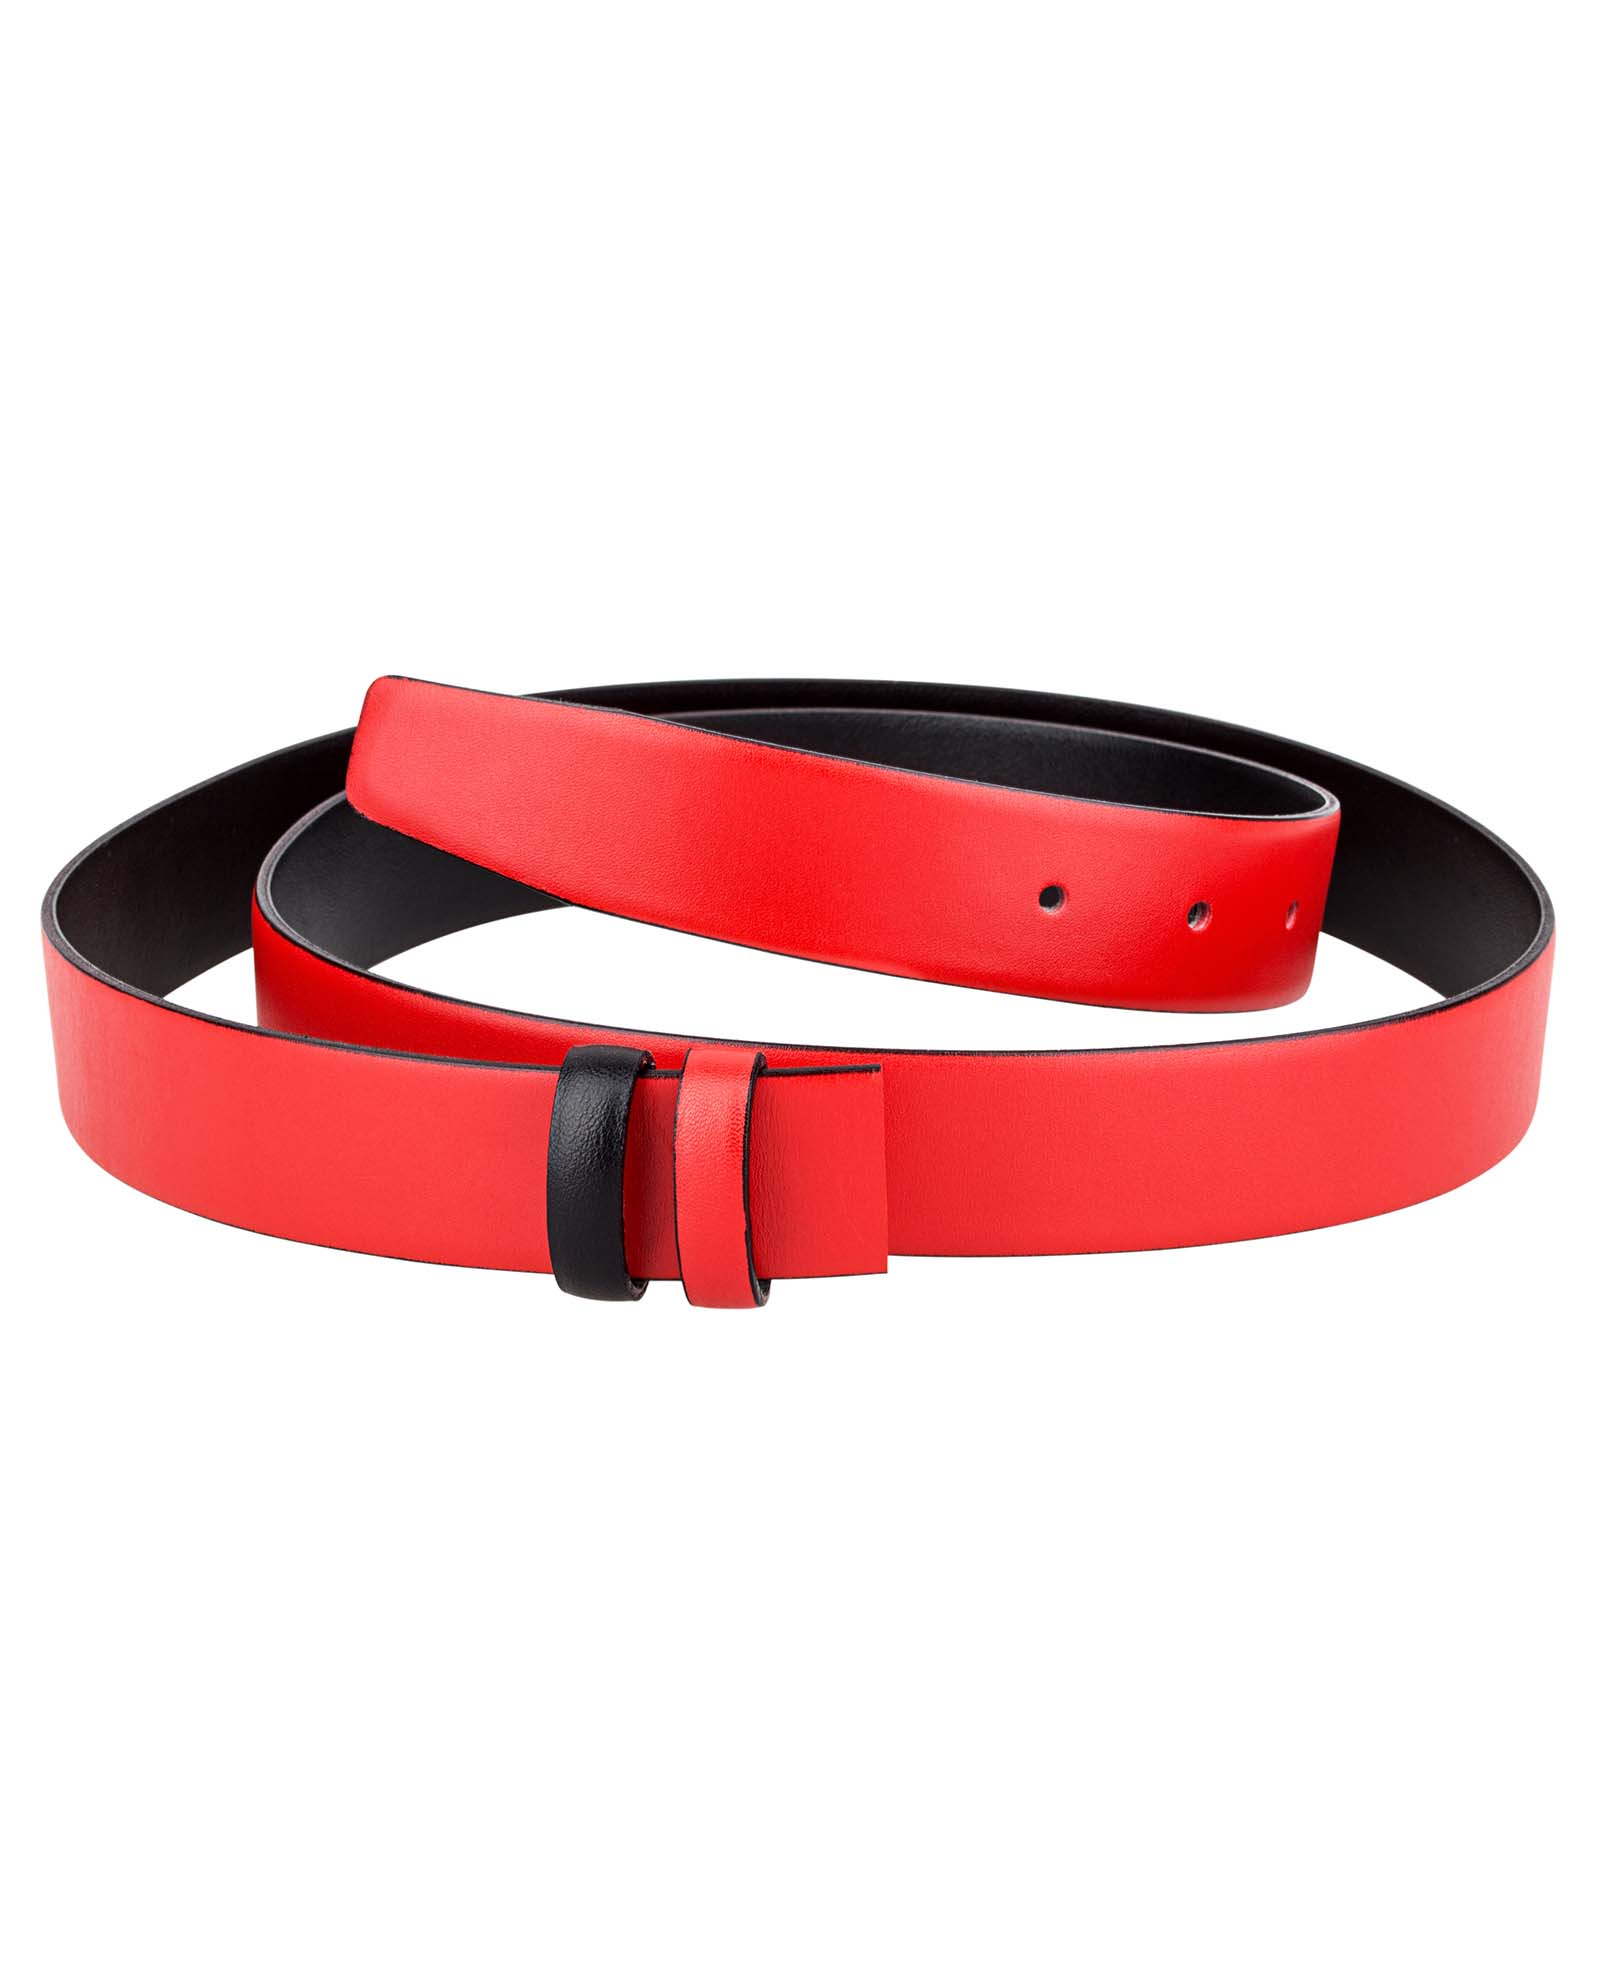 Buy Thin Reversible Belt Strap - Red Black - LeatherBeltsOnline.com